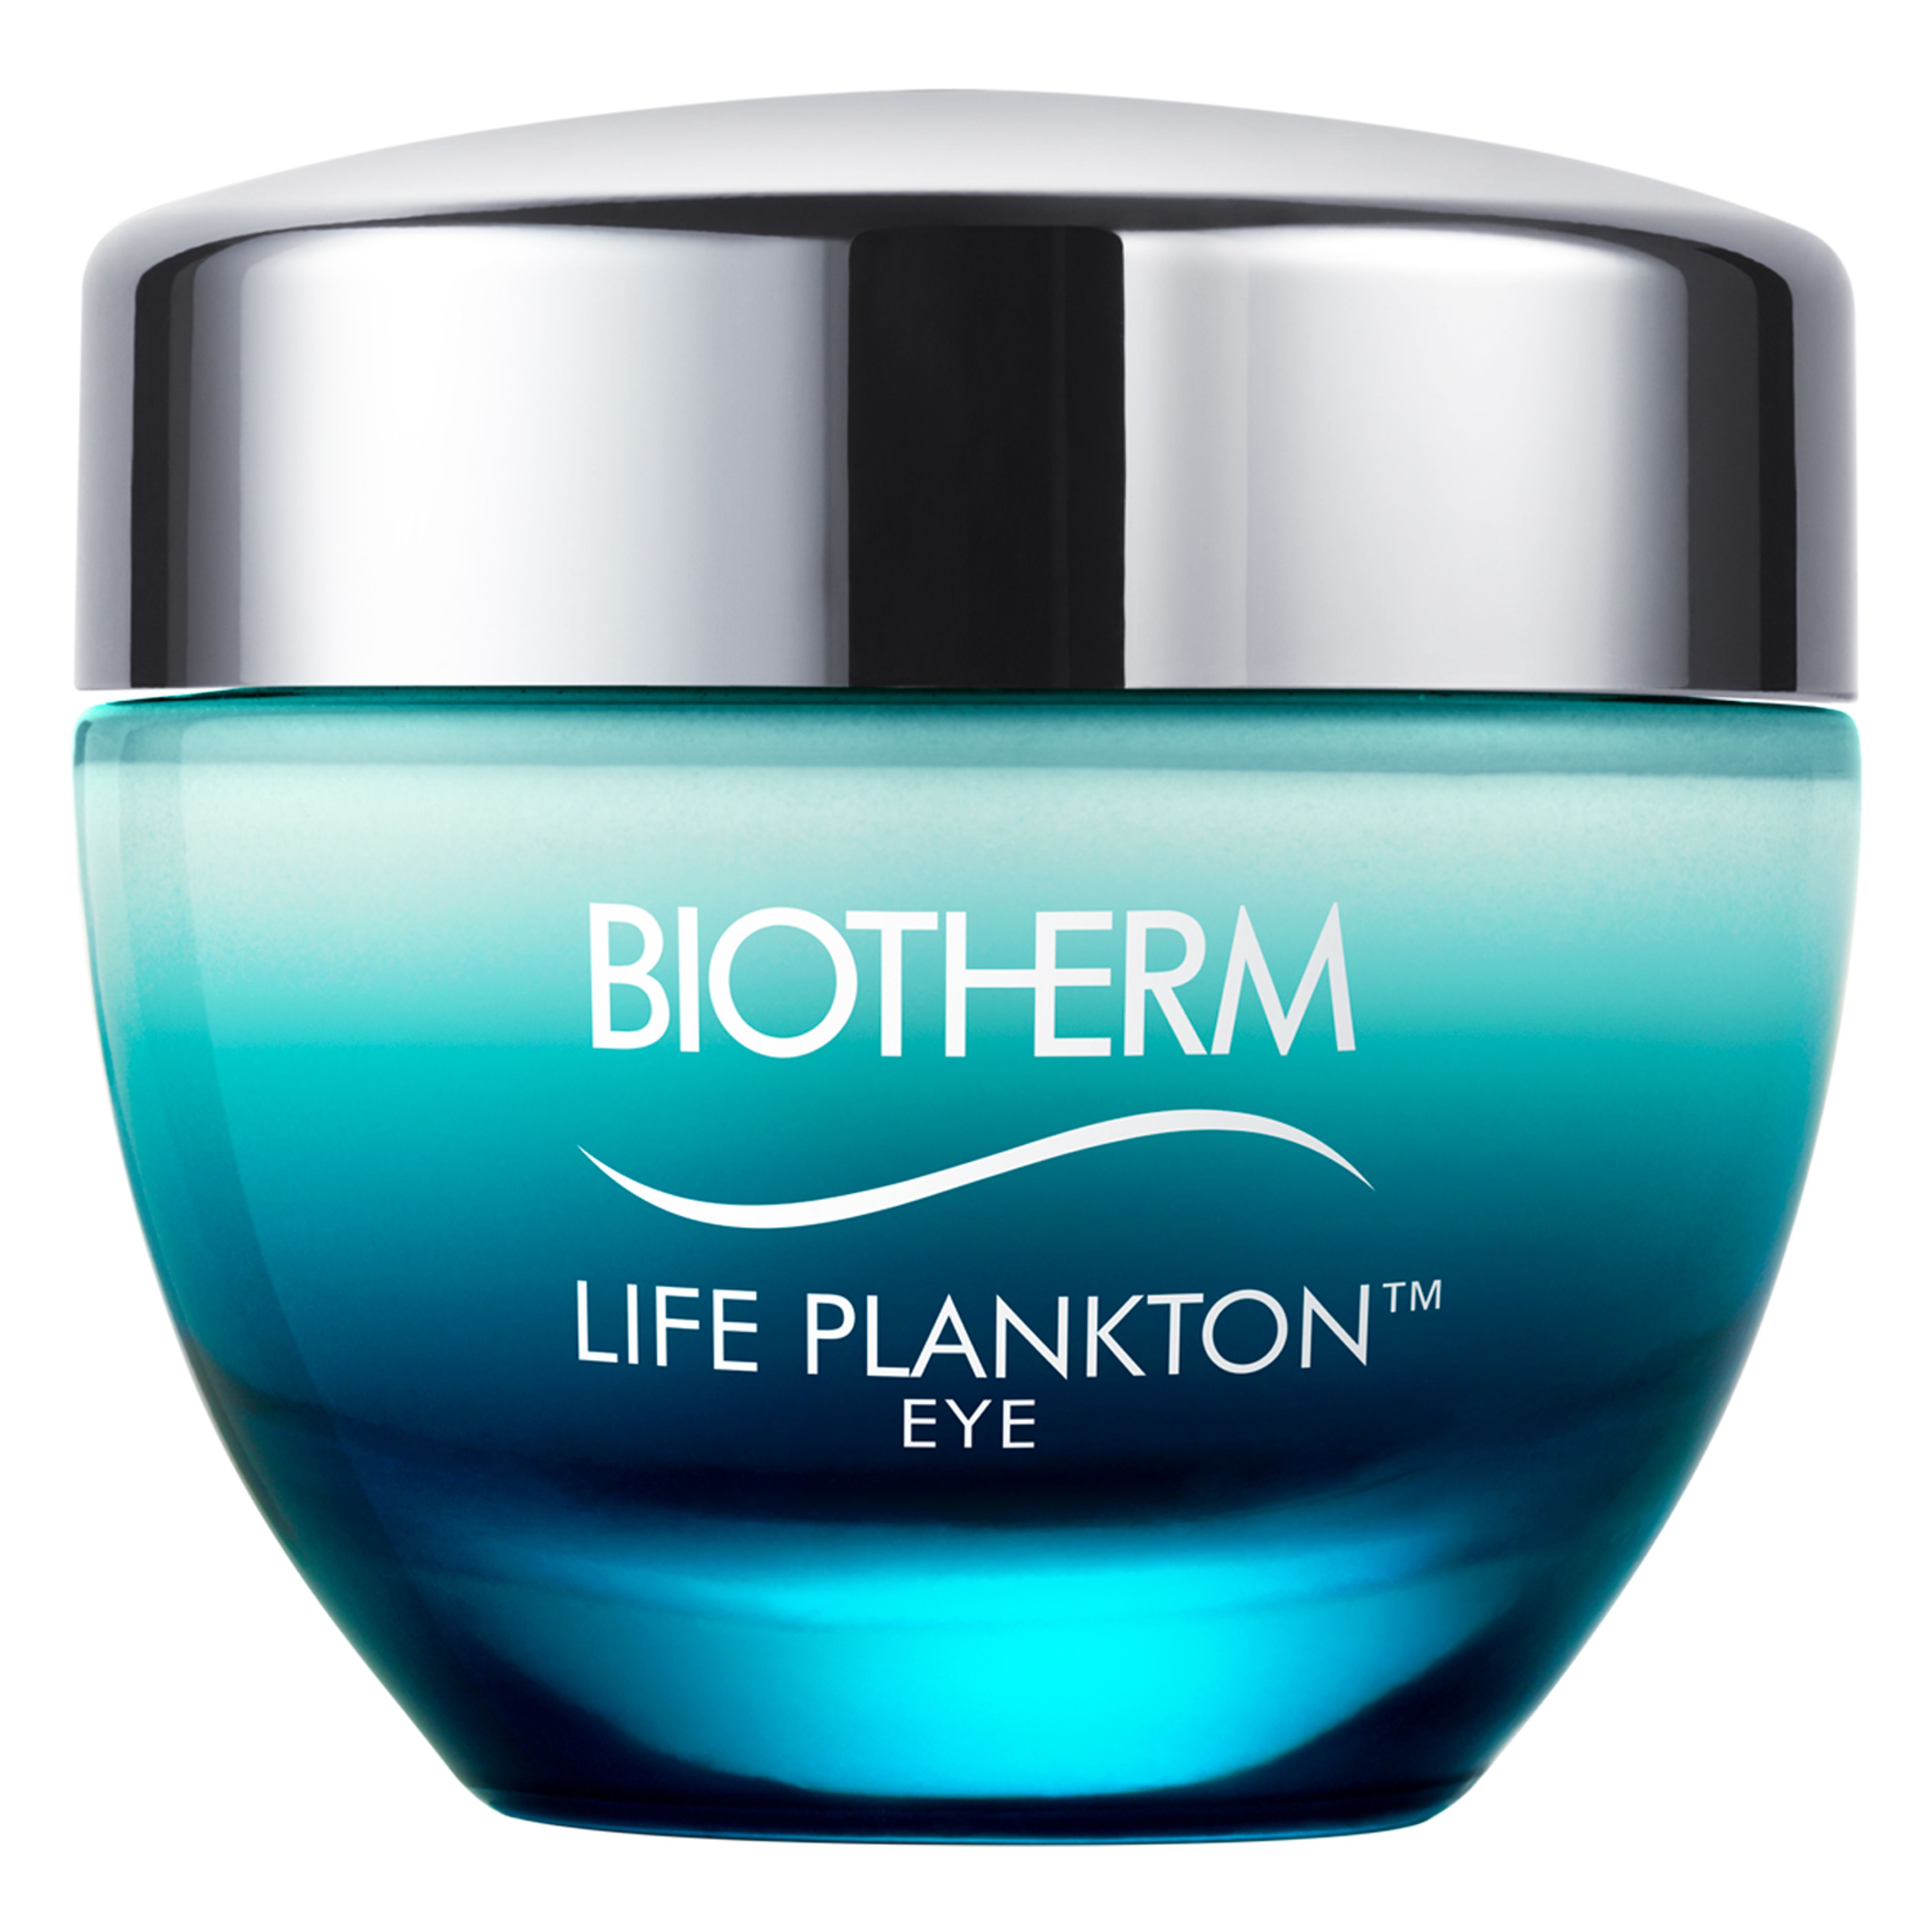 Biotherm Life Plankton™ Eye 1